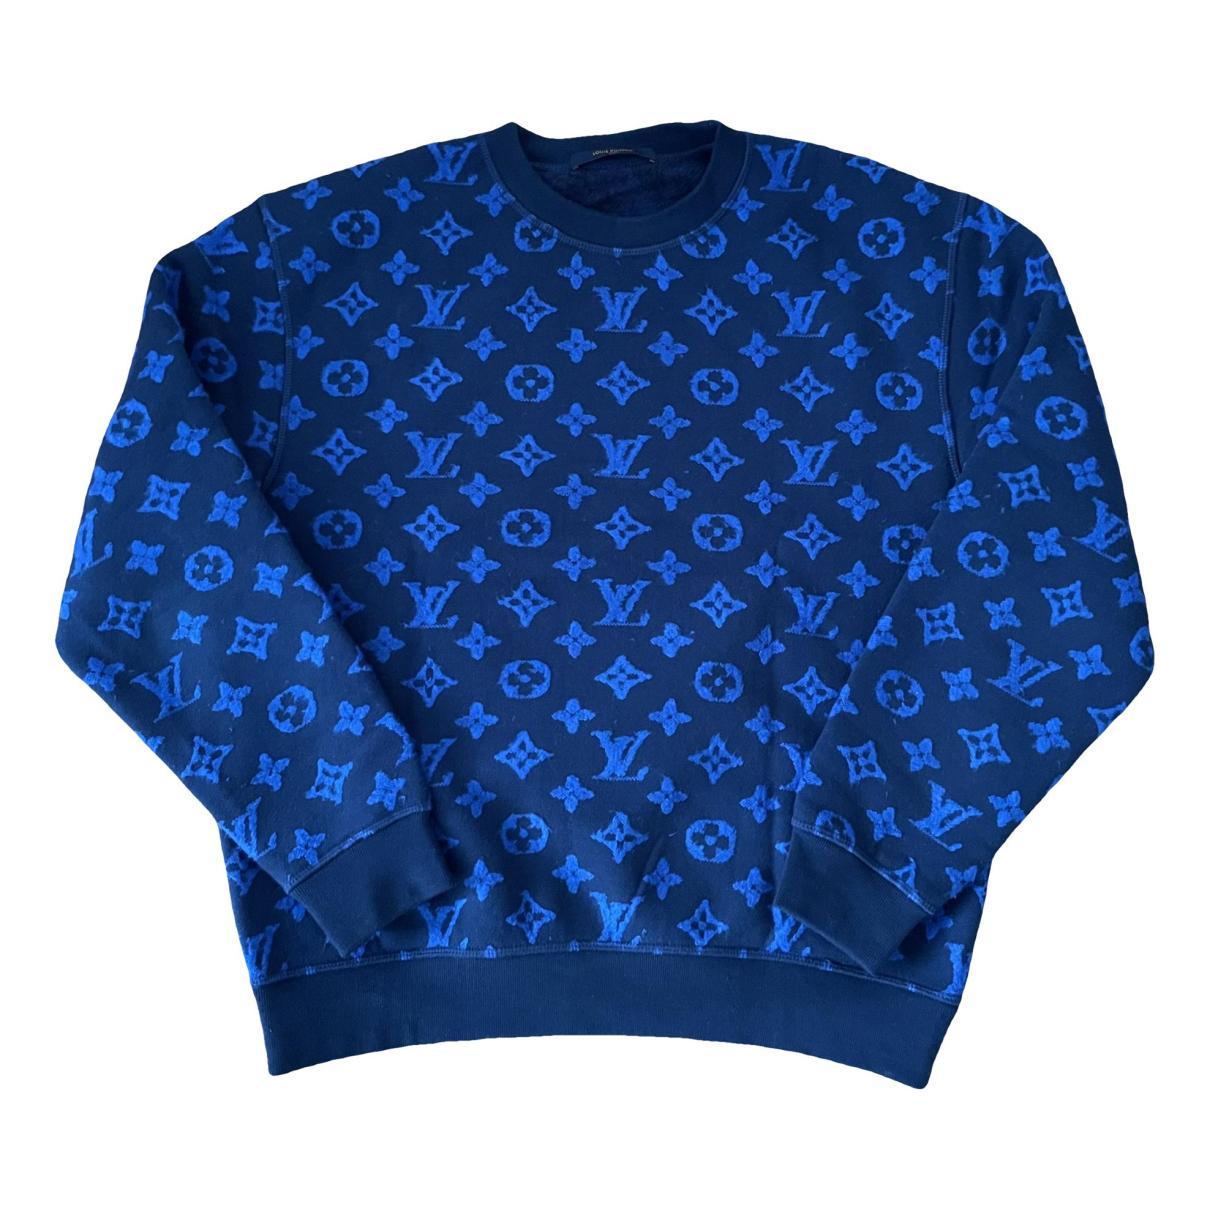 Sweatshirt Louis Vuitton Blue size S International in Cotton - 36592548